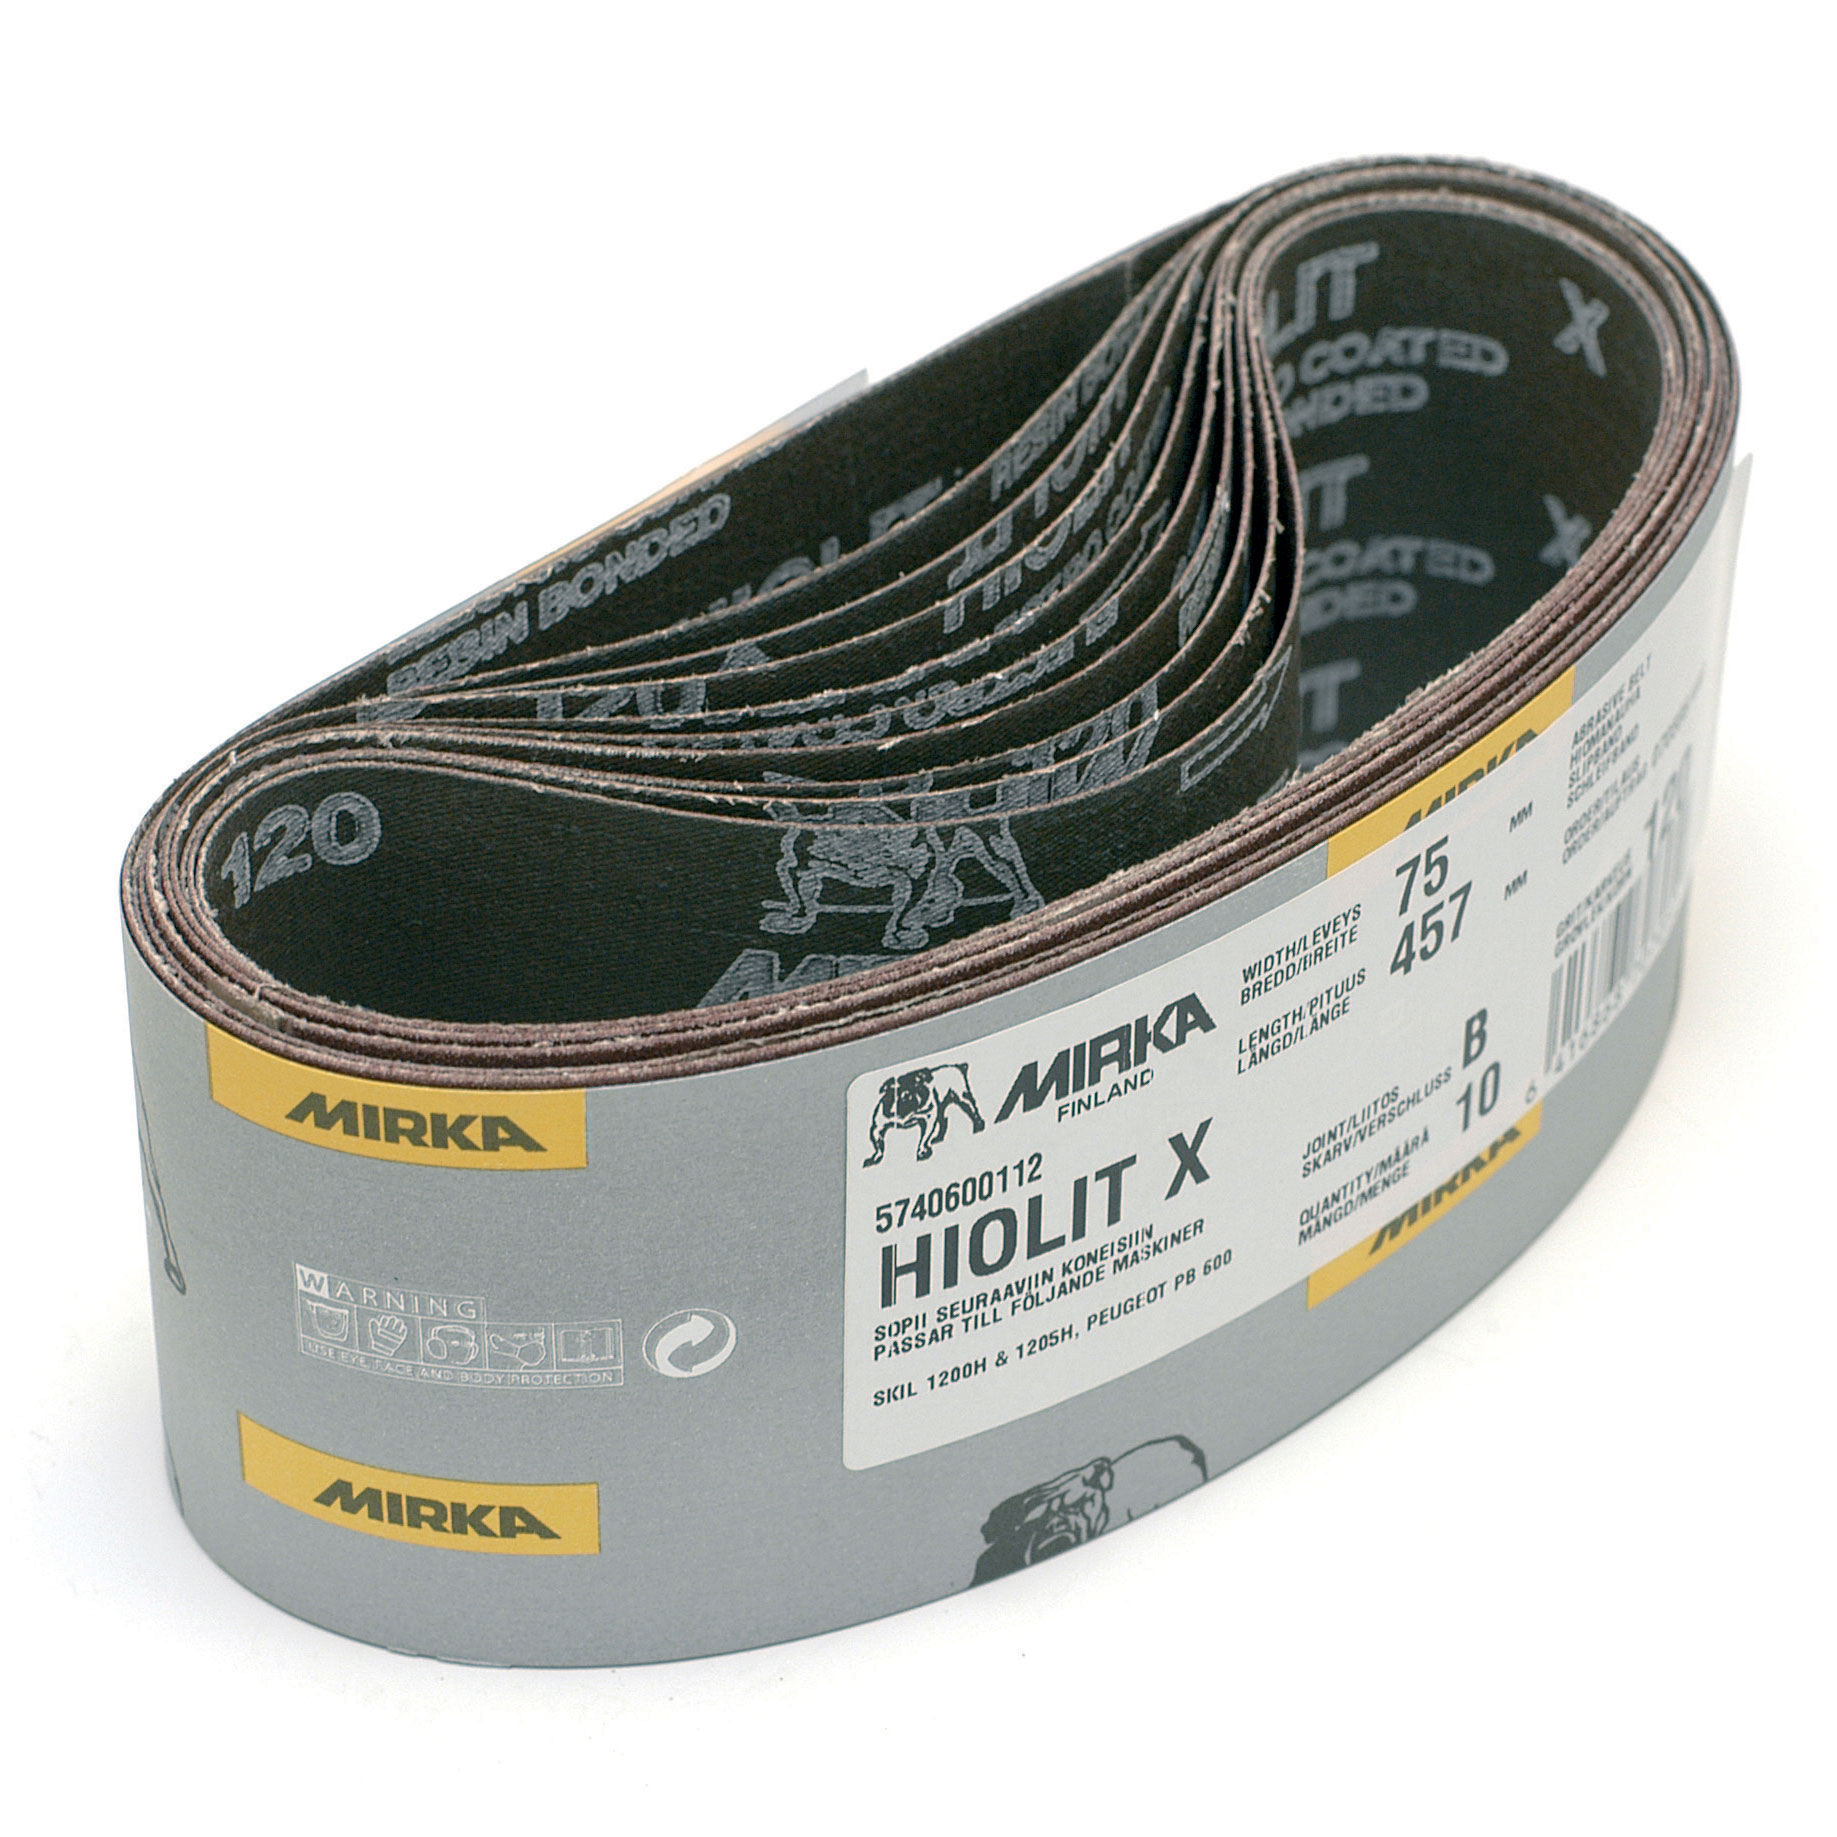 Hiolit Xo Portable Abrasive Belt (tape Joint), 100 Grit, 10 Belts/box